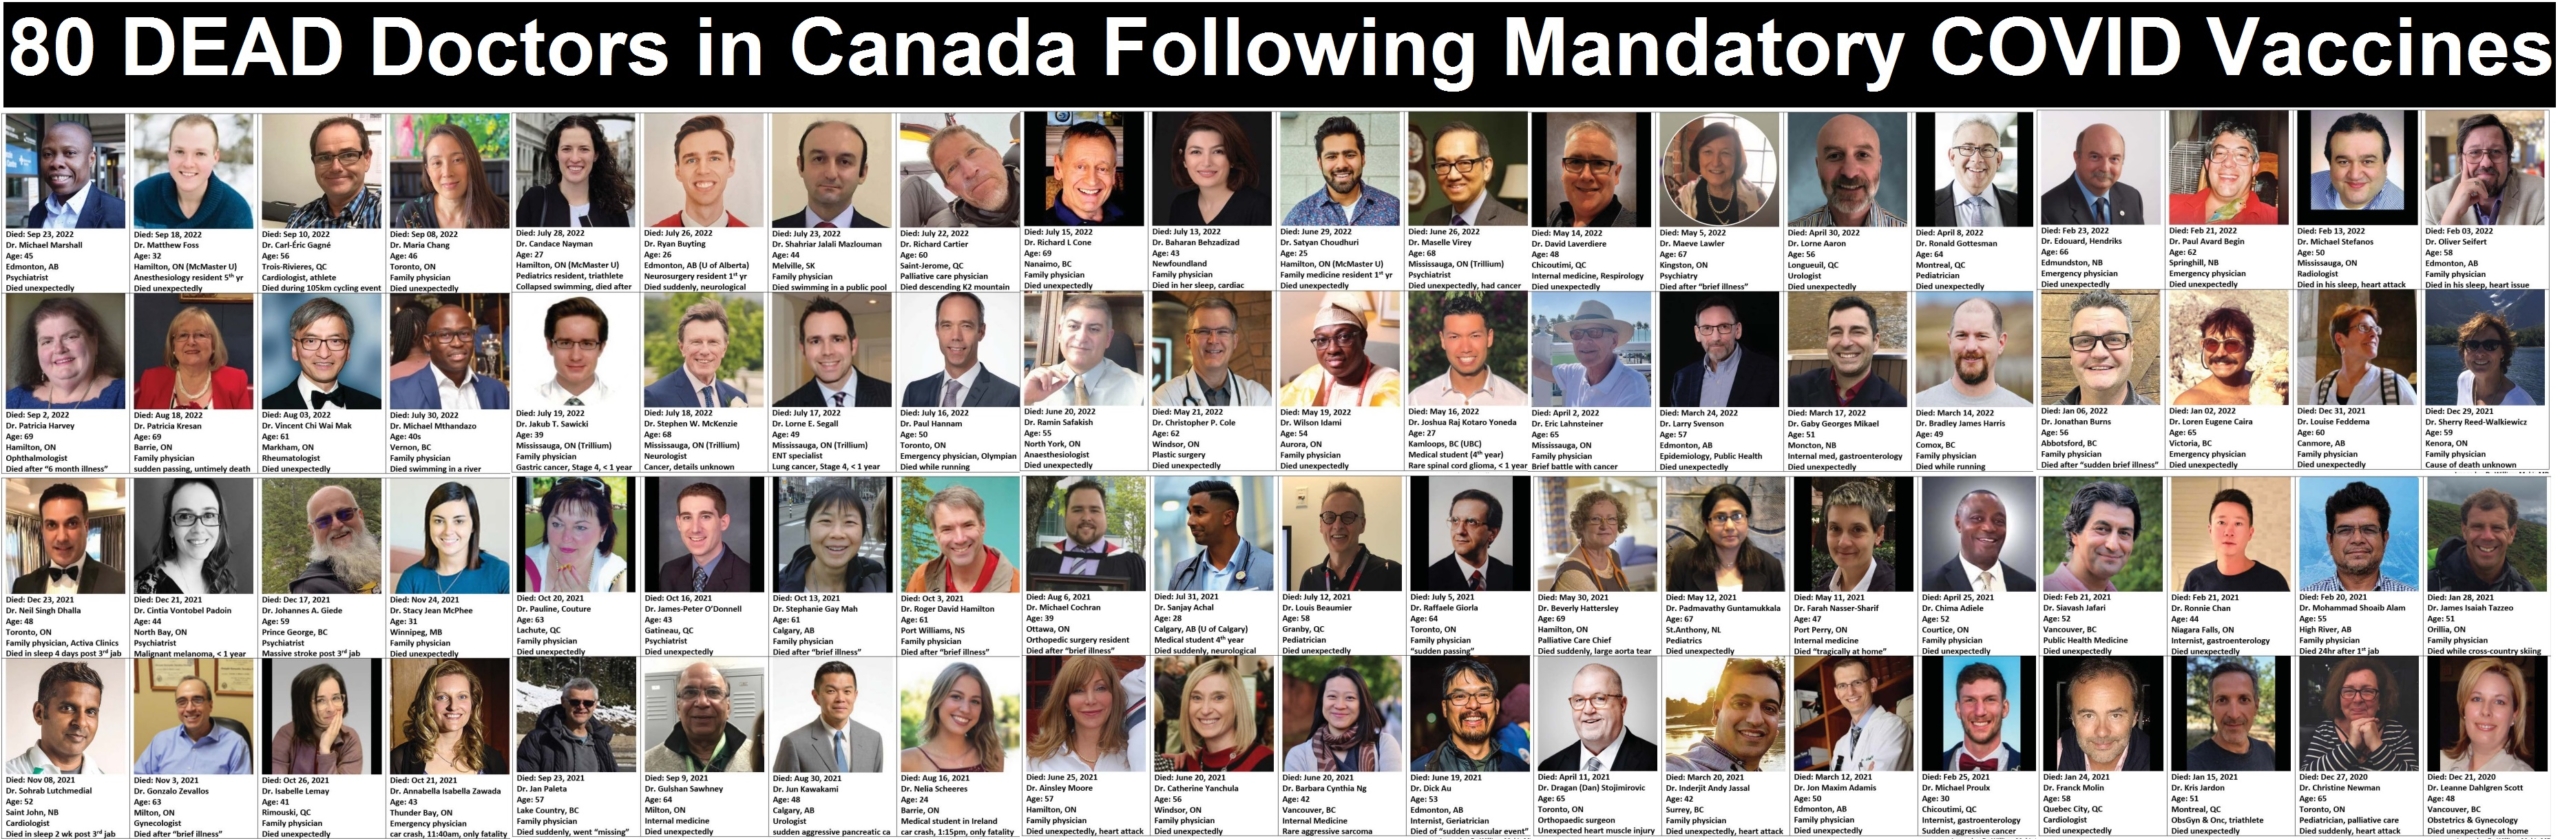 80 DEAD Canadian Doctors After COVID Vaccine Mandates